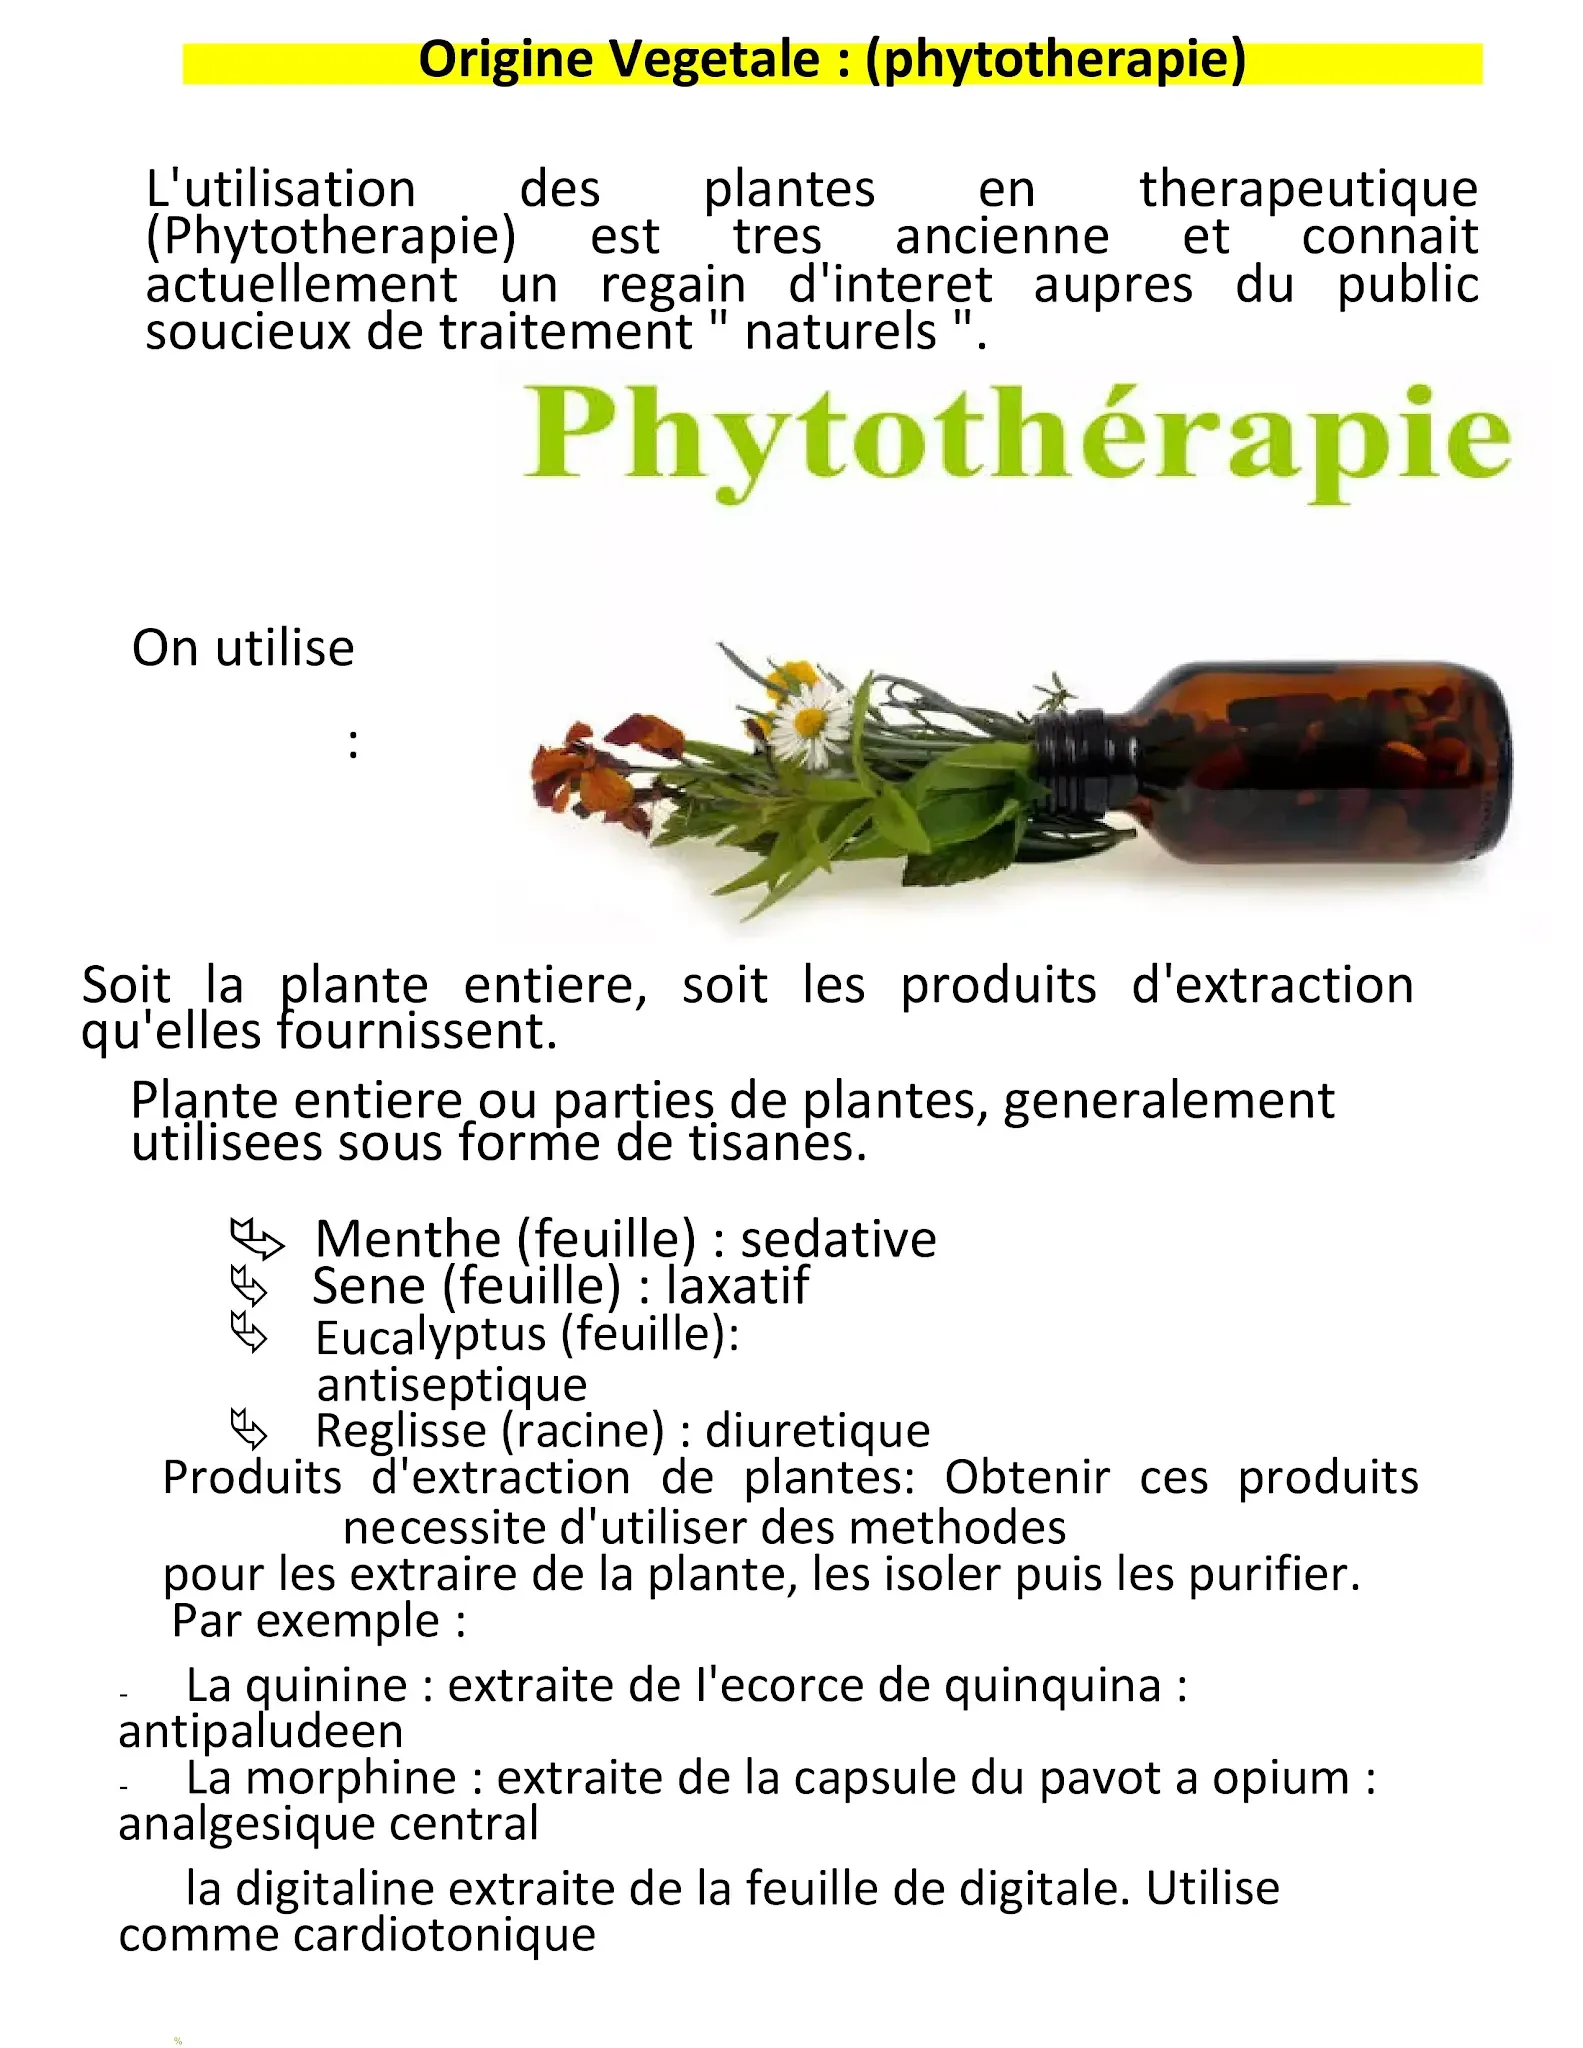 Origine Vegetale : (phytotherapie)